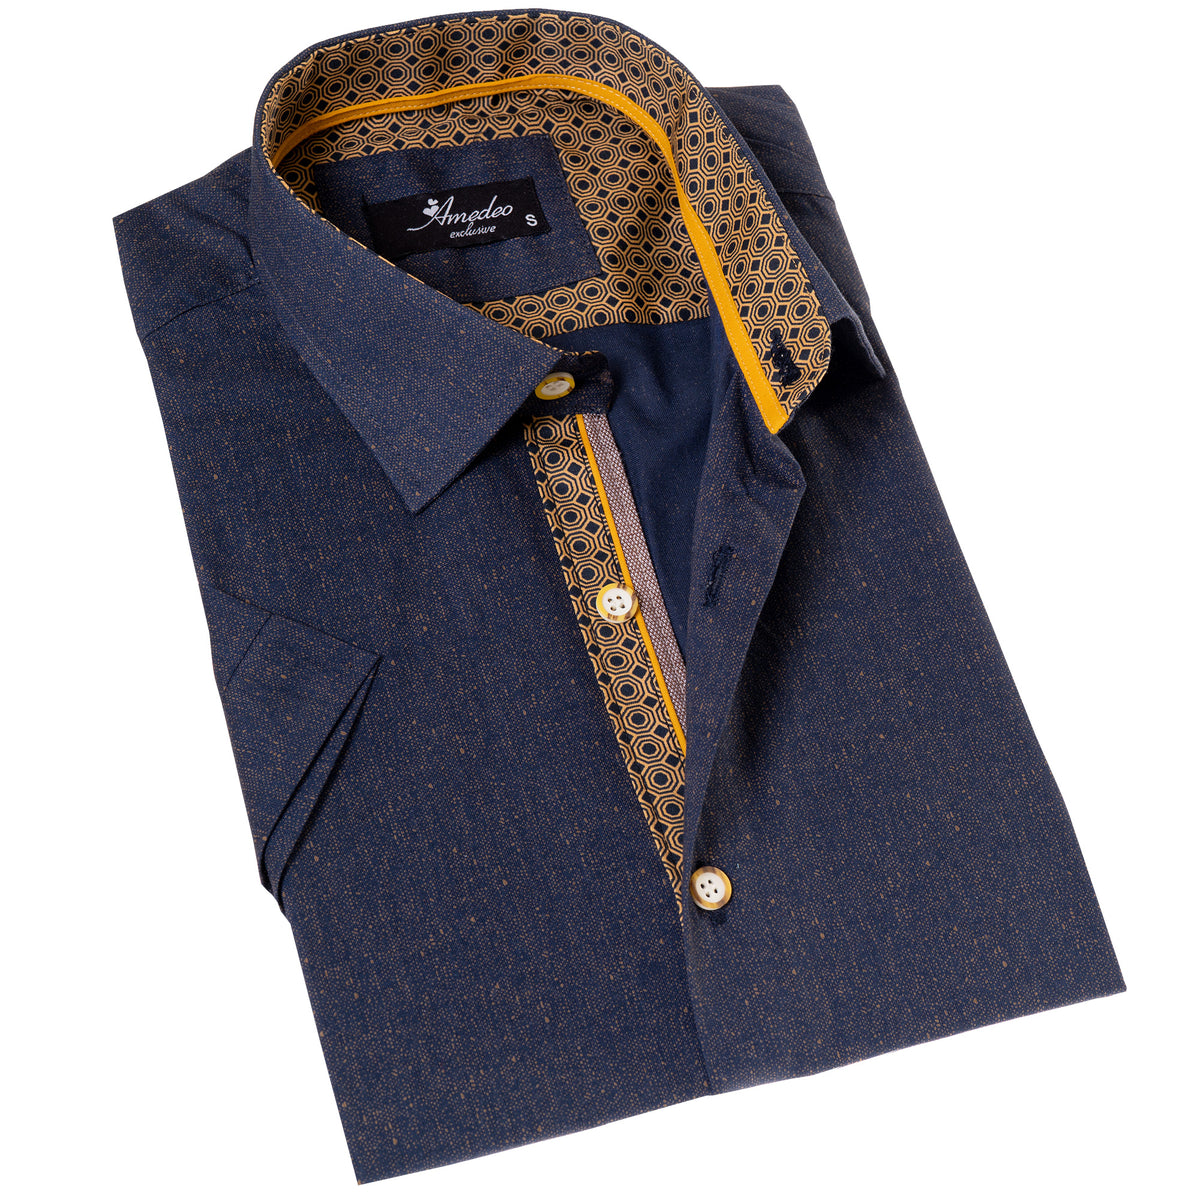 Navy Mustard Designer Paisley  Short Sleeve Button up Shirts - Tailored Slim Fit Cotton Dress Shirts